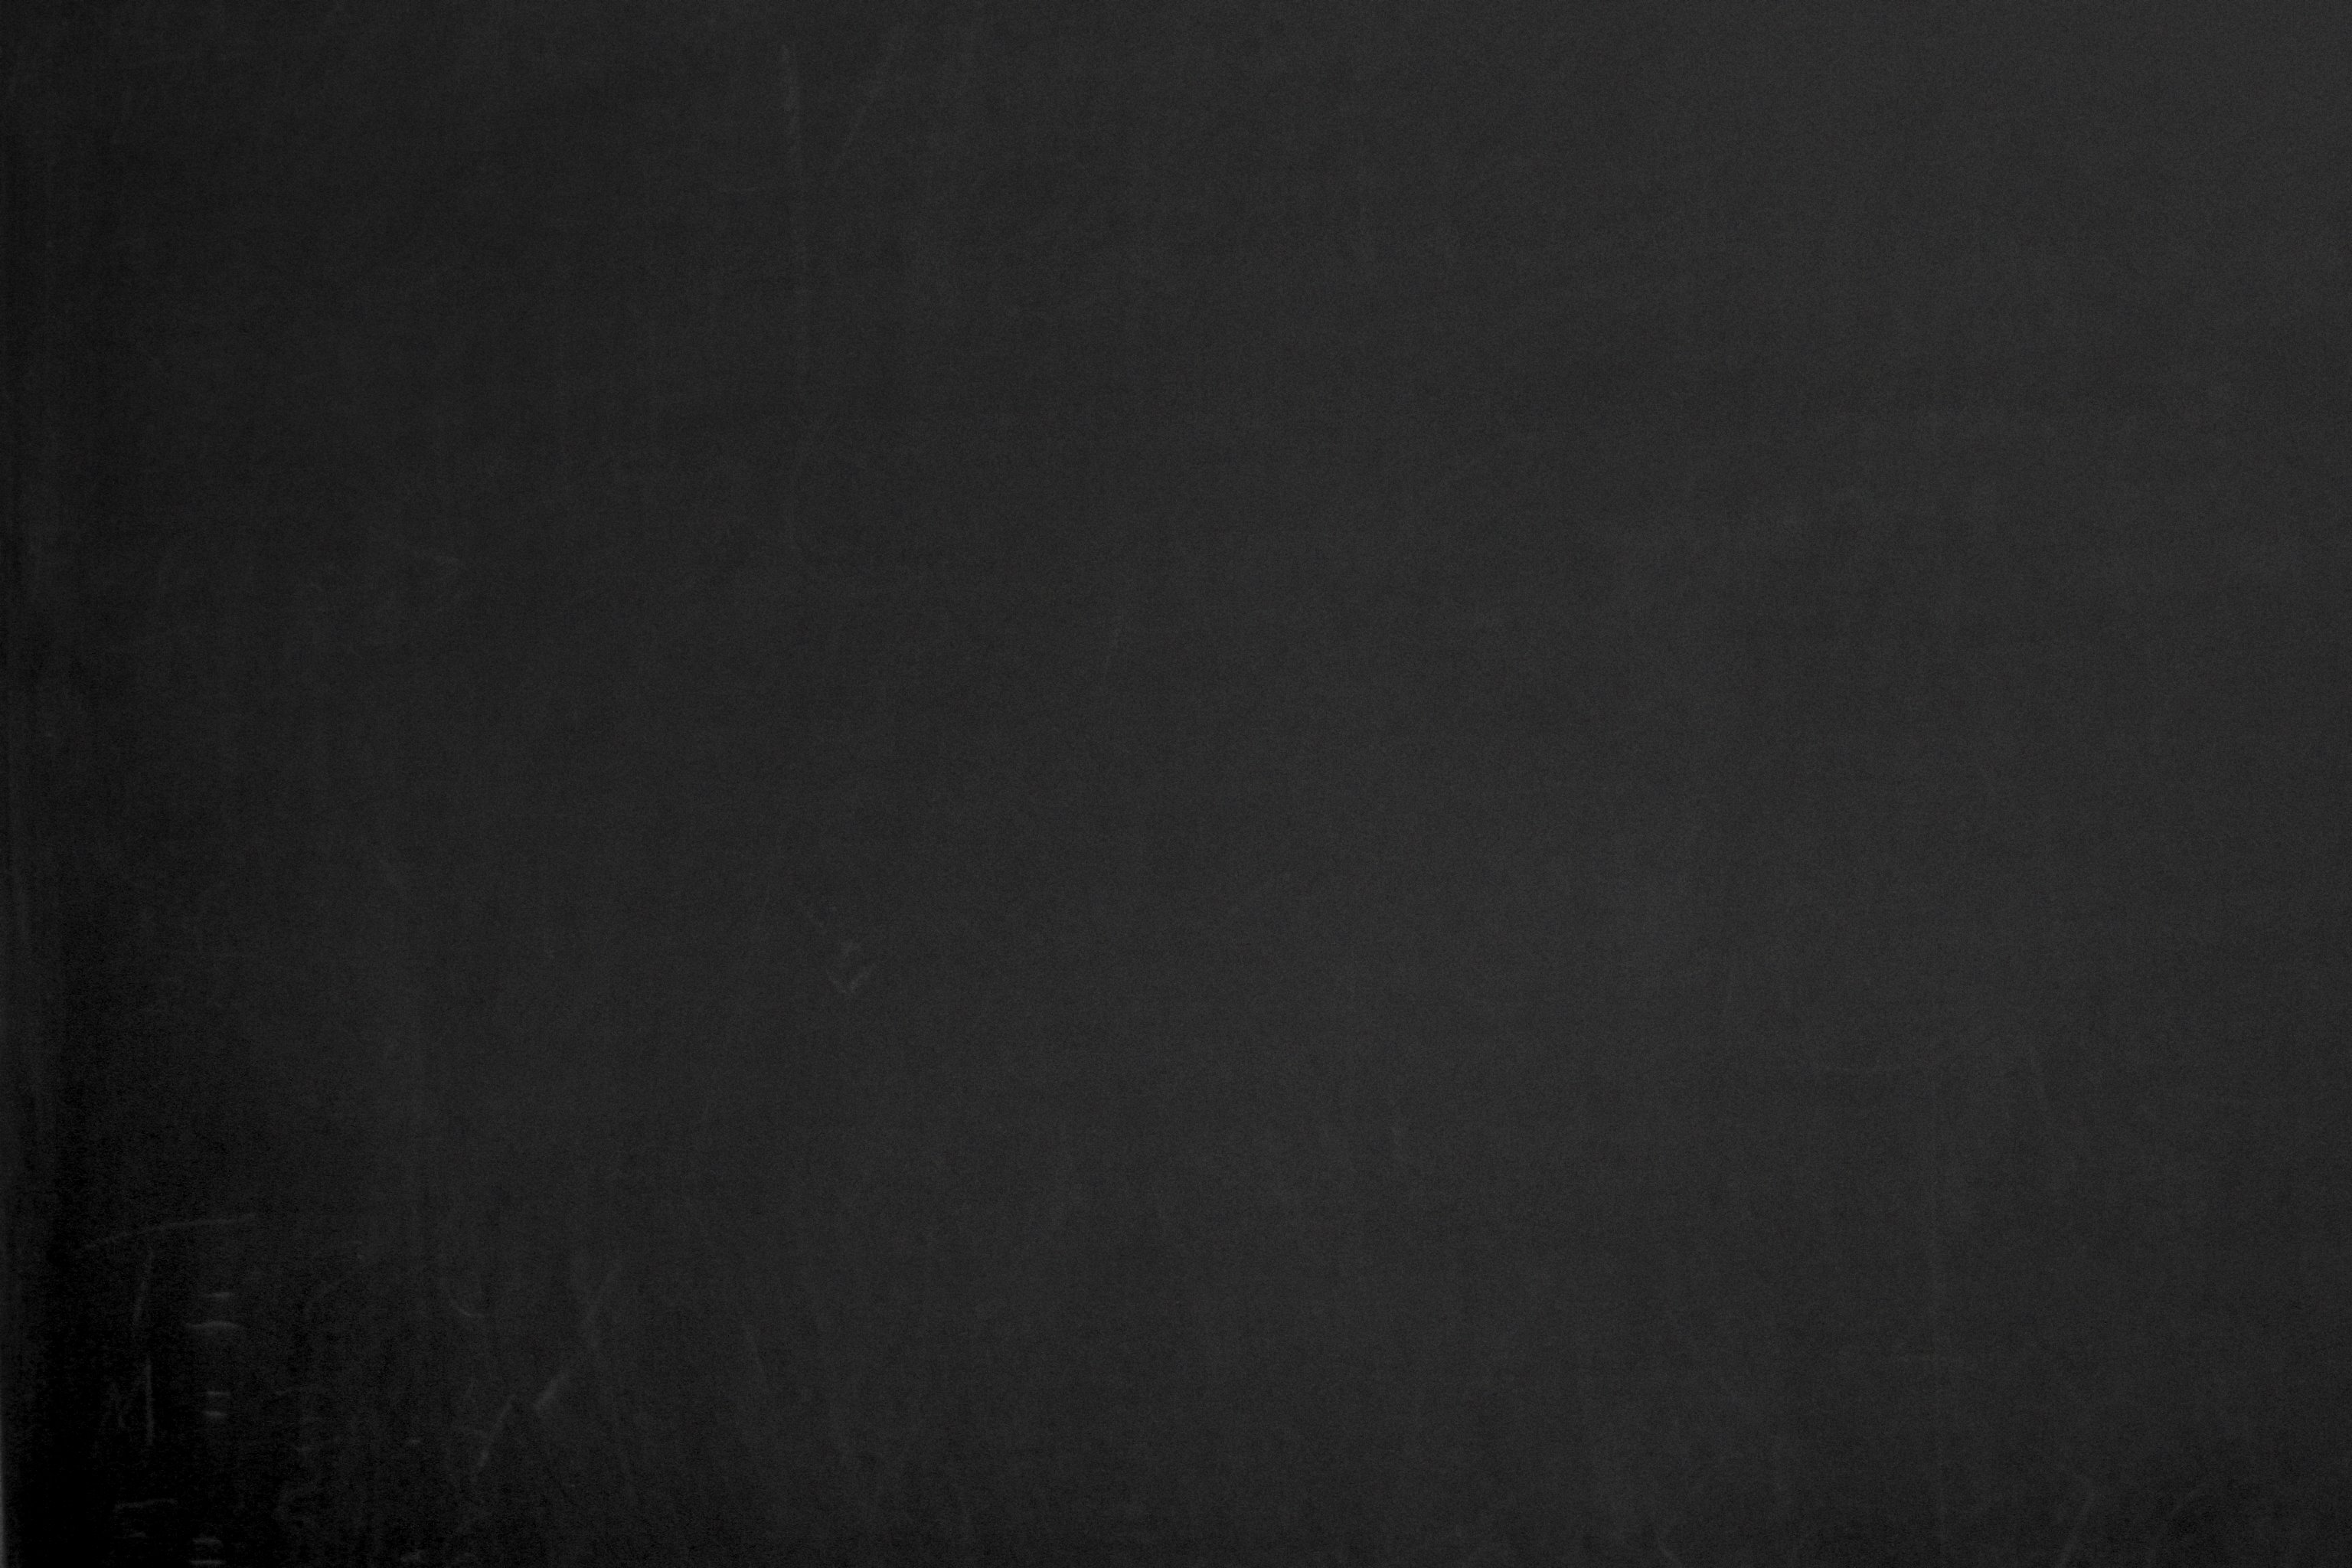 Flat black blackboard images free download